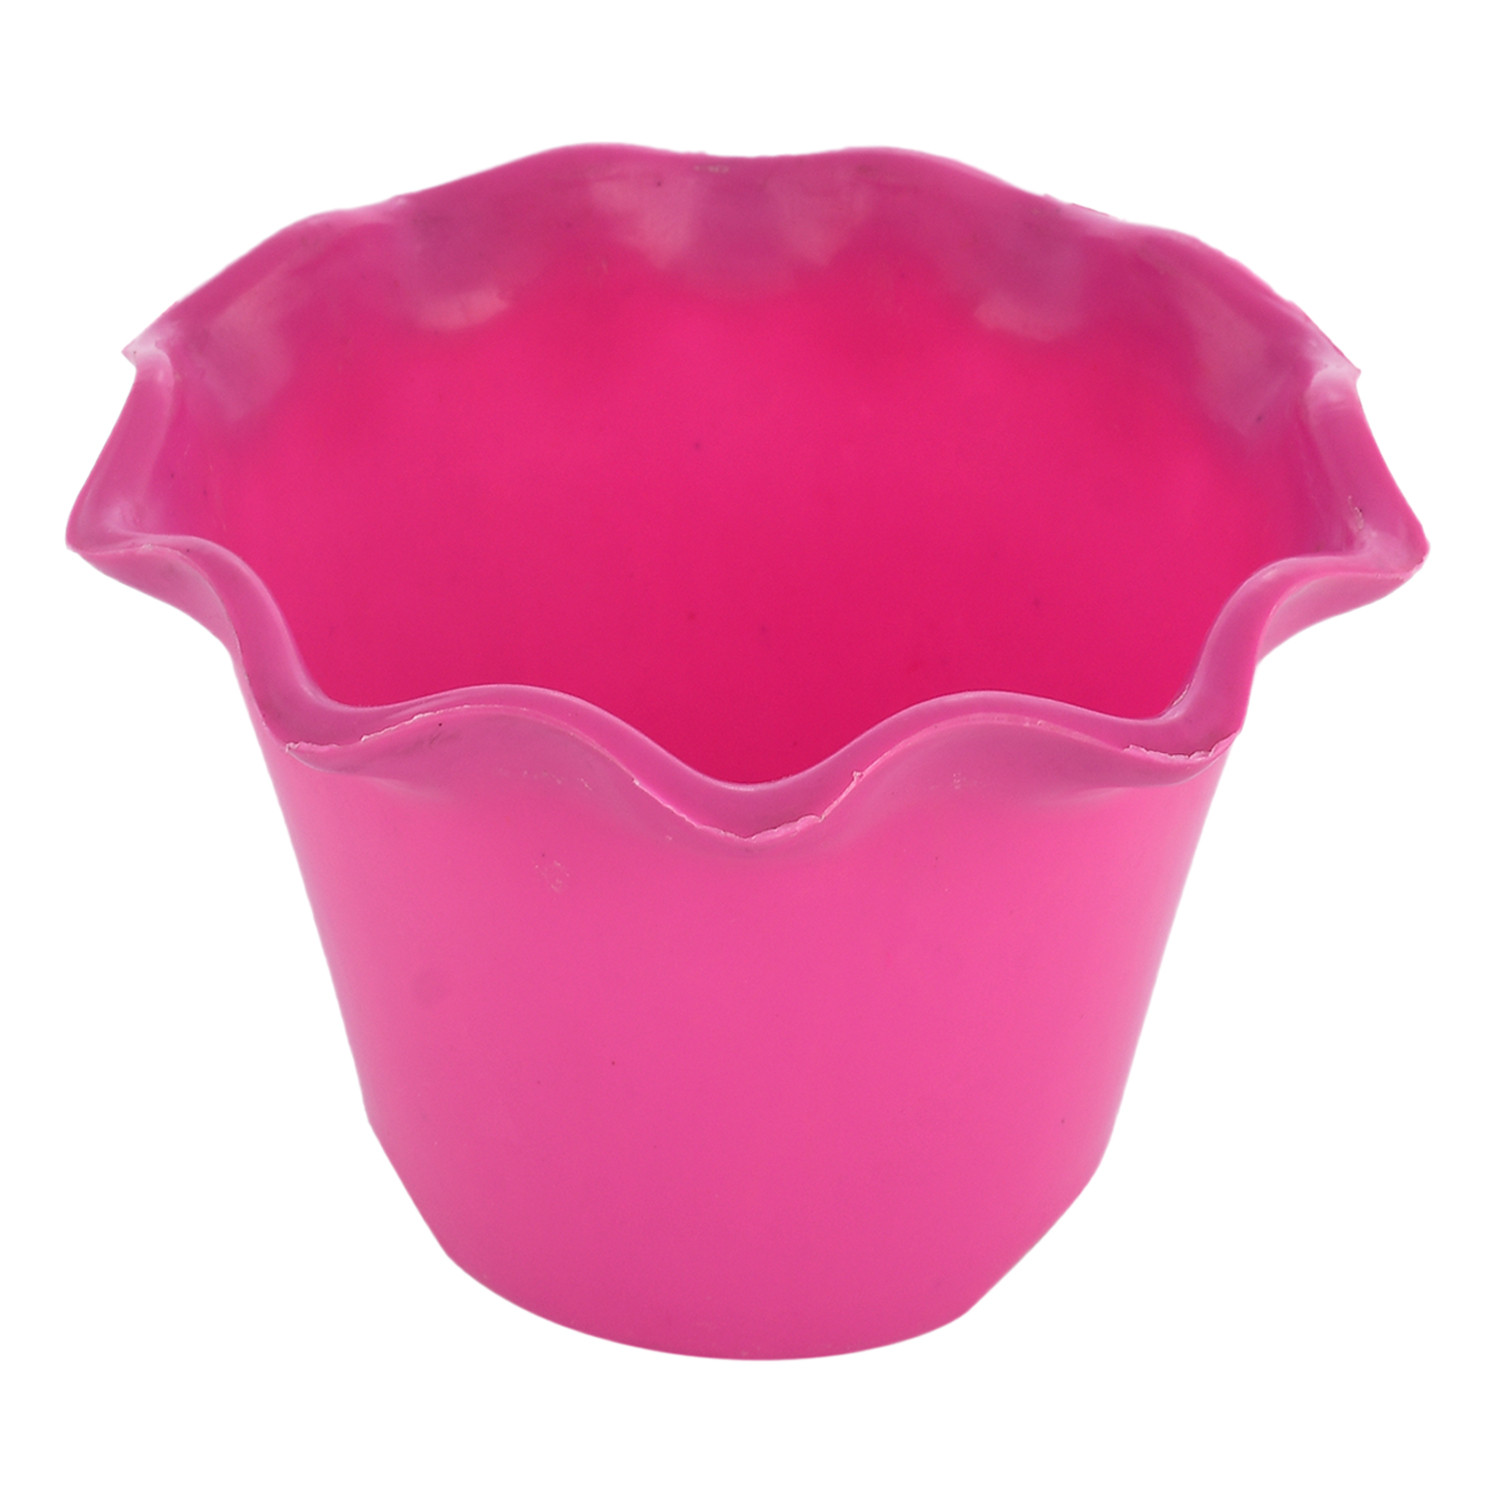 Kuber Industries Blossom Flower Pot|Durable Plastic Flower Pots|Planters for Home Décor|Garden|Living Room|Balcony|Pack of 2 (Pink & Orange)